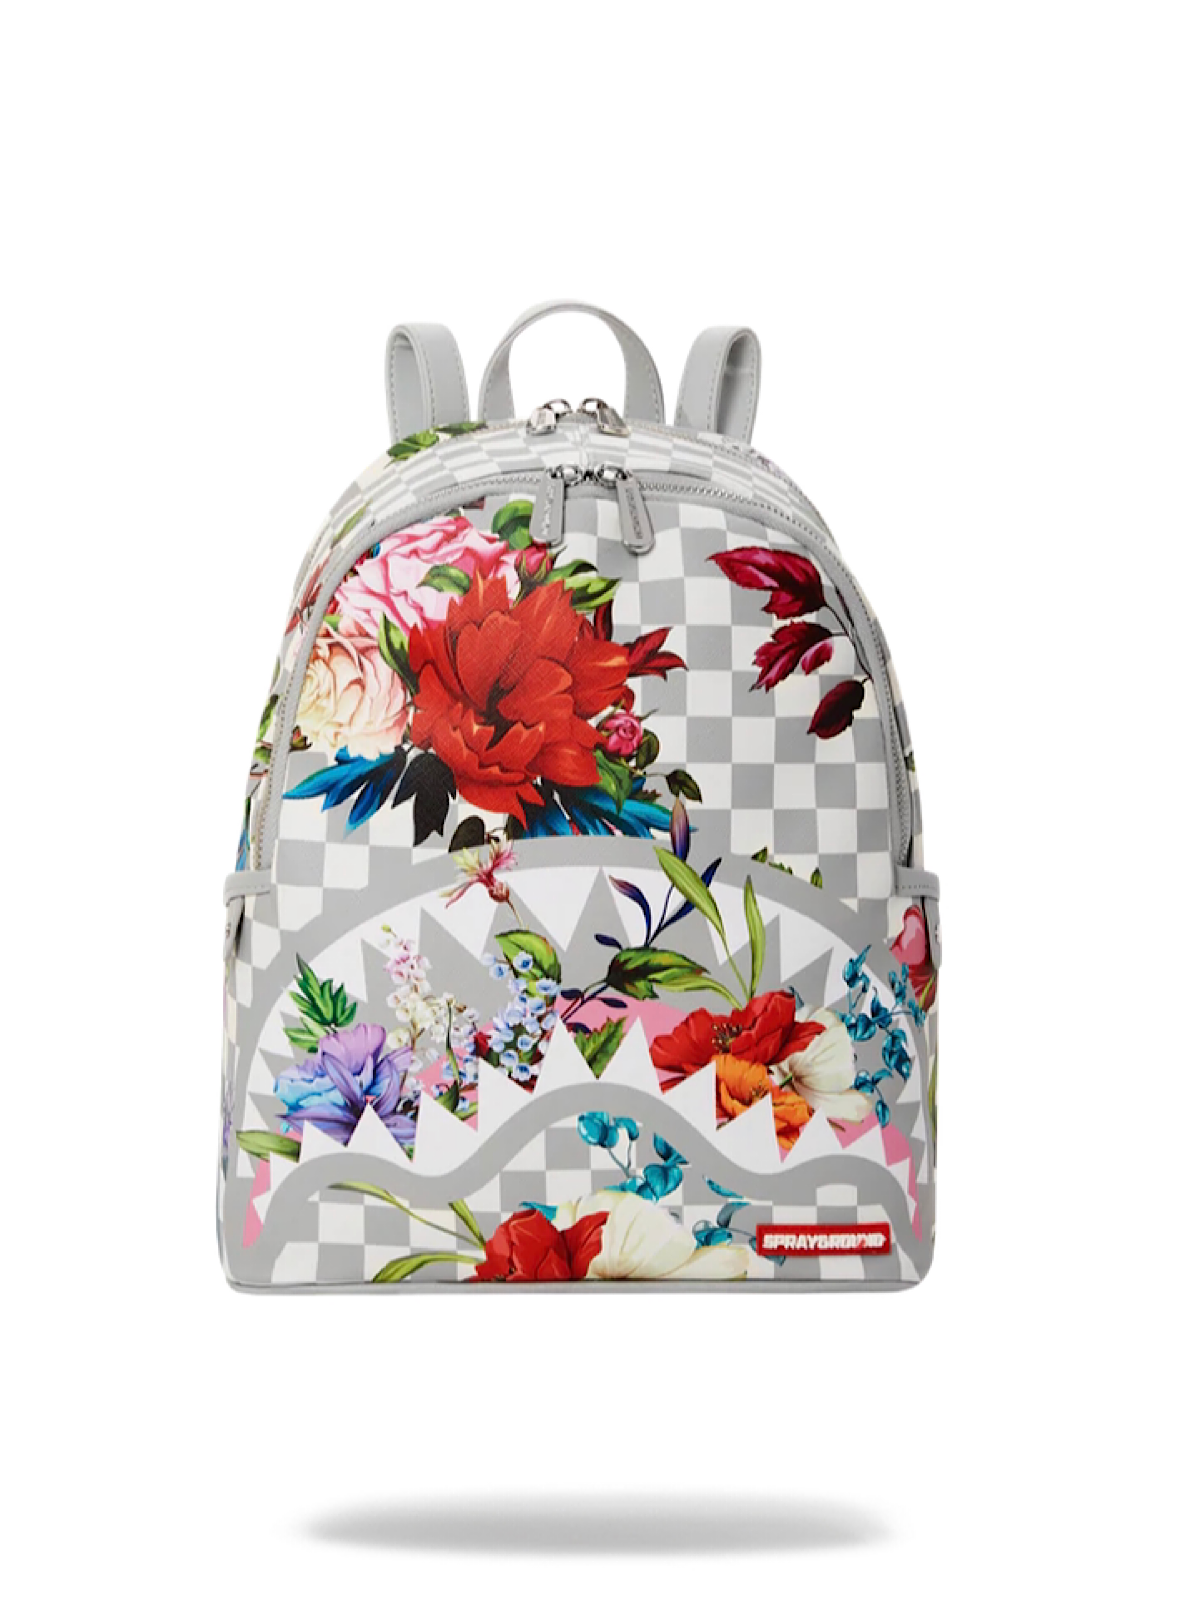 SPRAYGROUND: bag for kids - White  Sprayground bag 910B4682NSZ online at